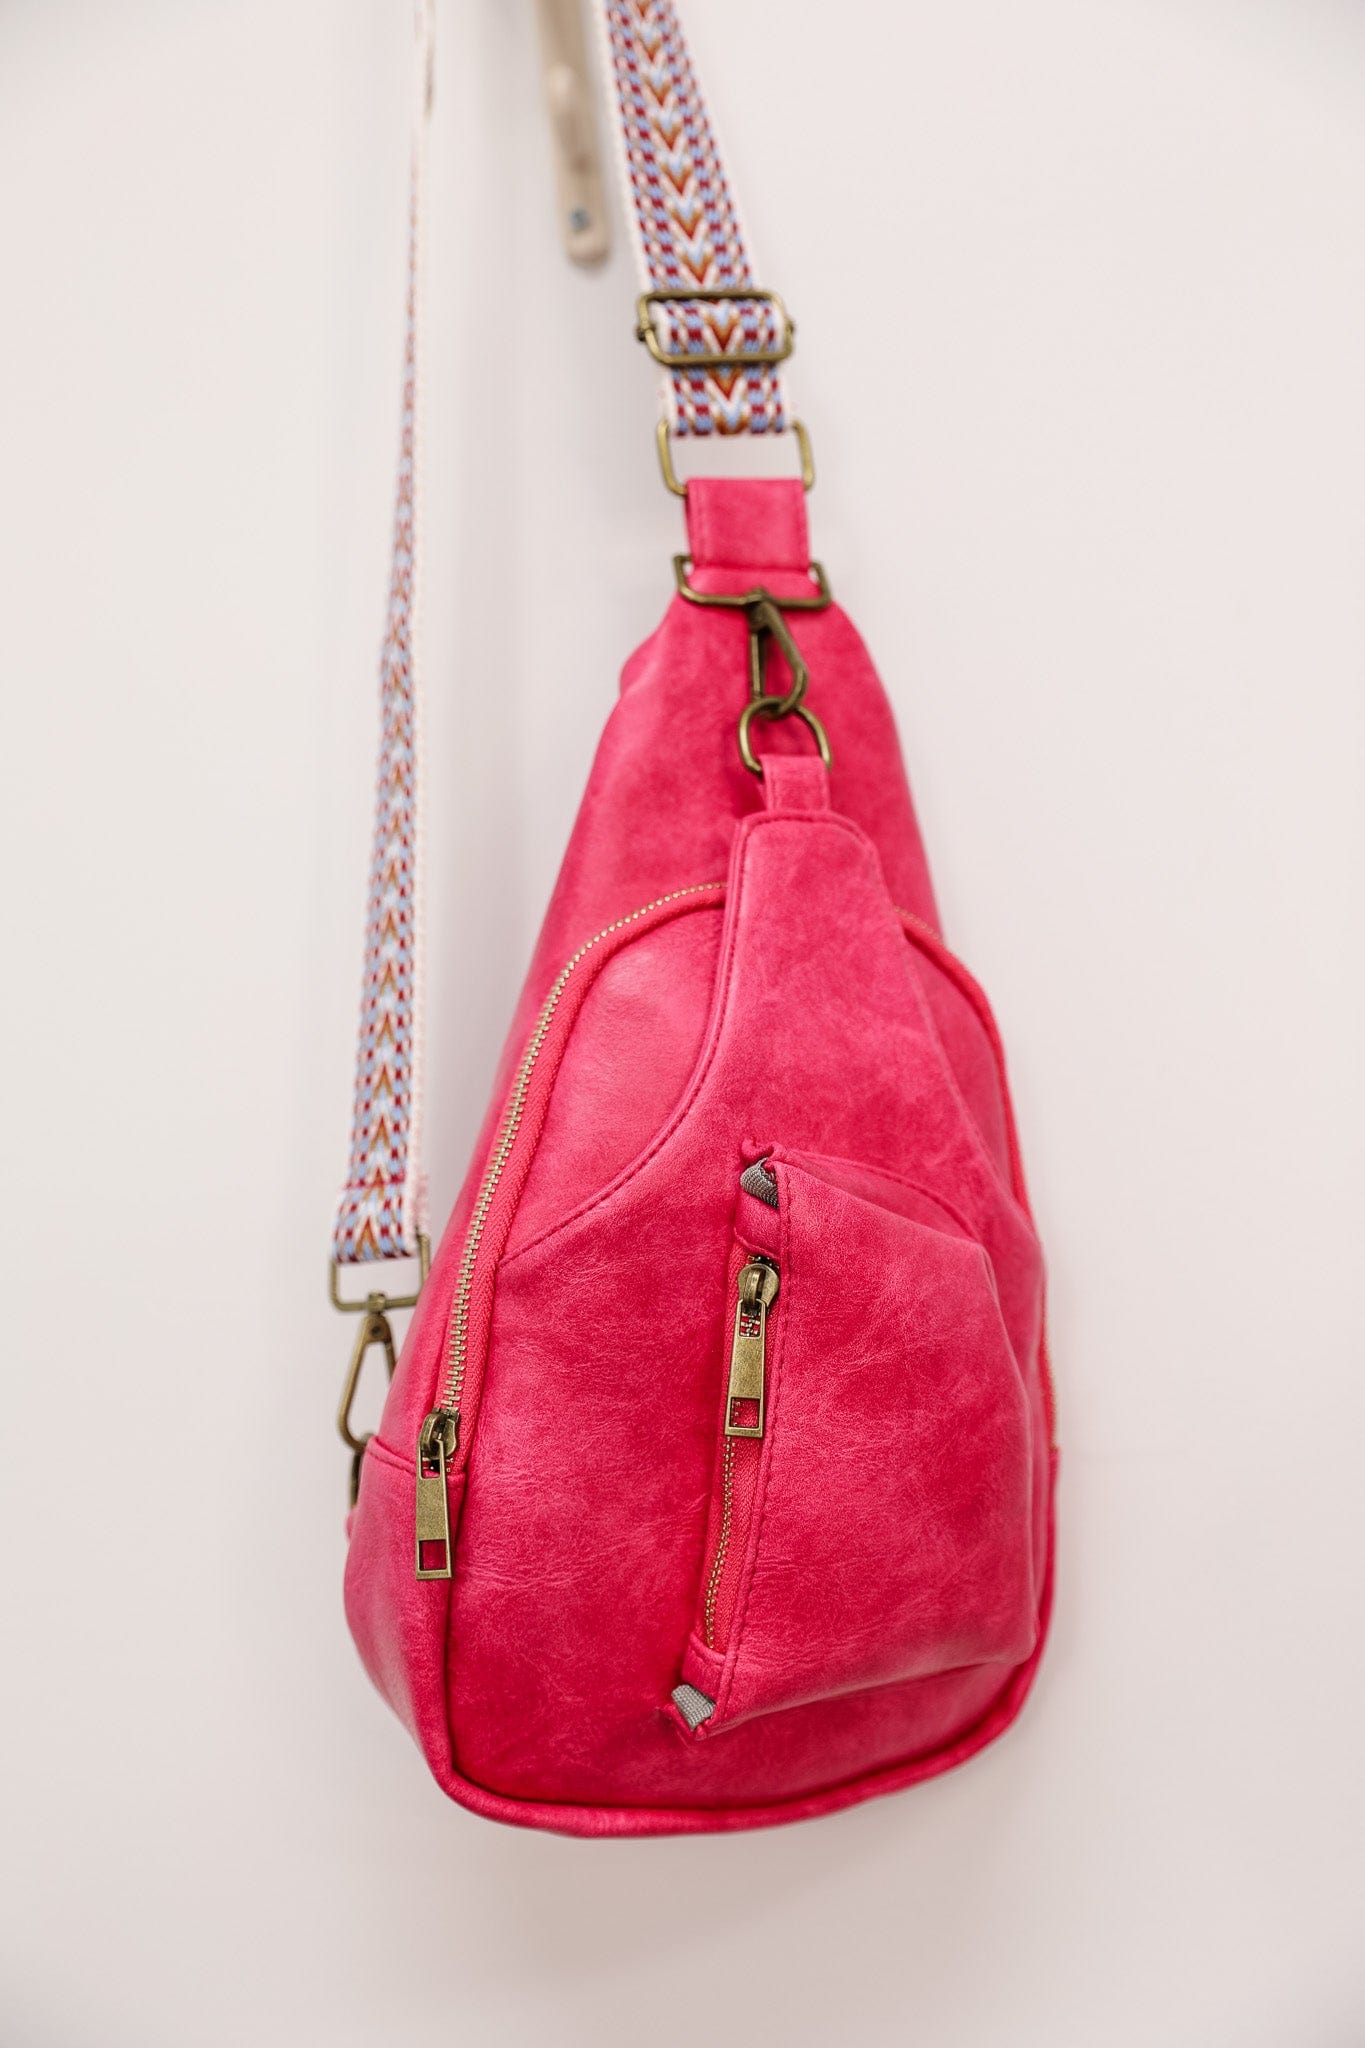 Bebe backpack purse. Hera sm backpack hot pink | eBay